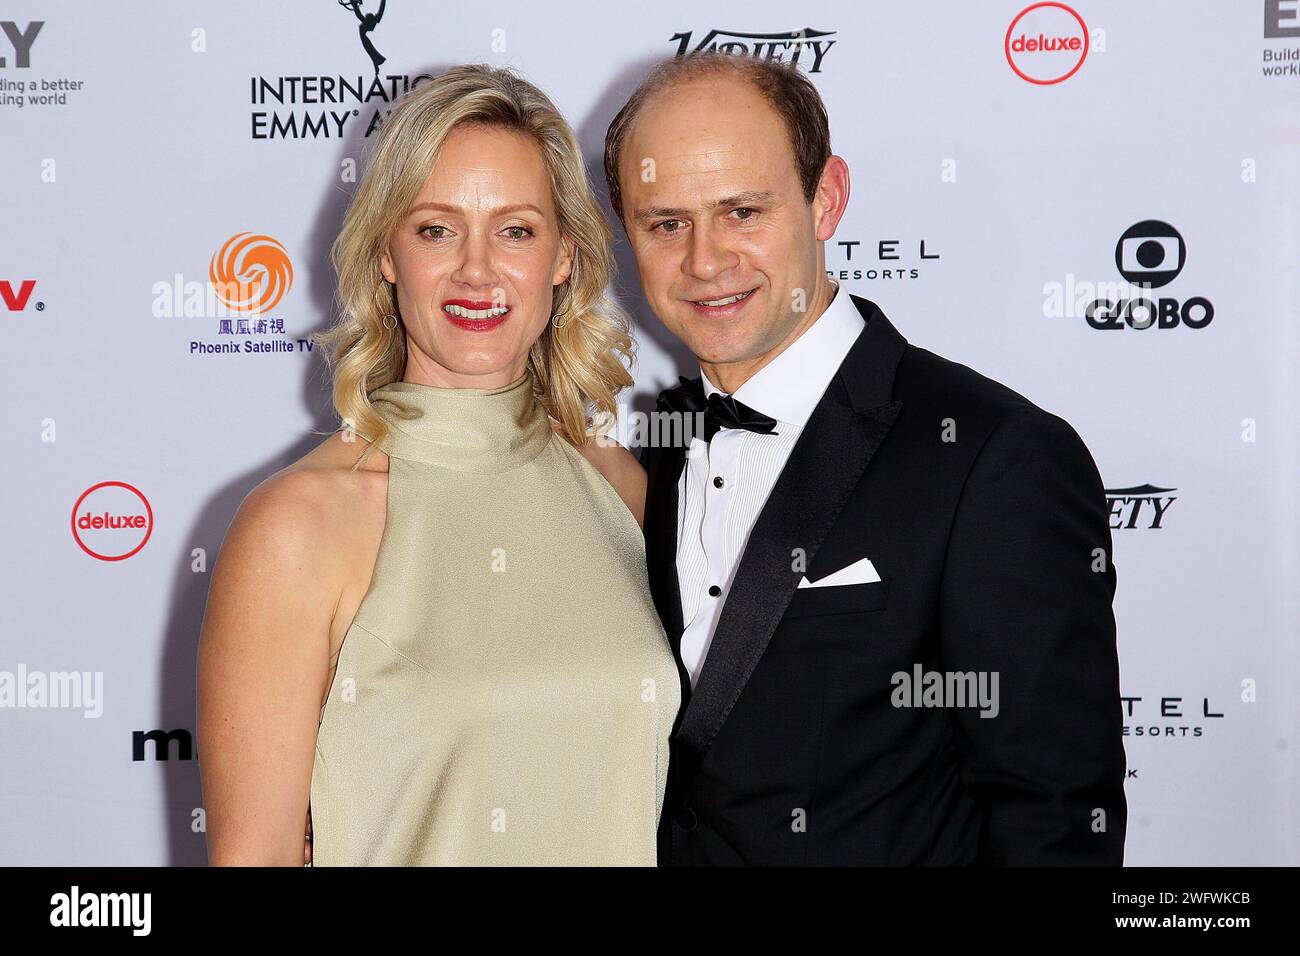 New York, NY, USA. 19 November, 2018. Anna Schudt, Moritz Fuhrmann at the 46th Annual International Emmy Awards - Arrivals at The New York Hilton. Credit: Steve Mack/Alamy Stock Photo